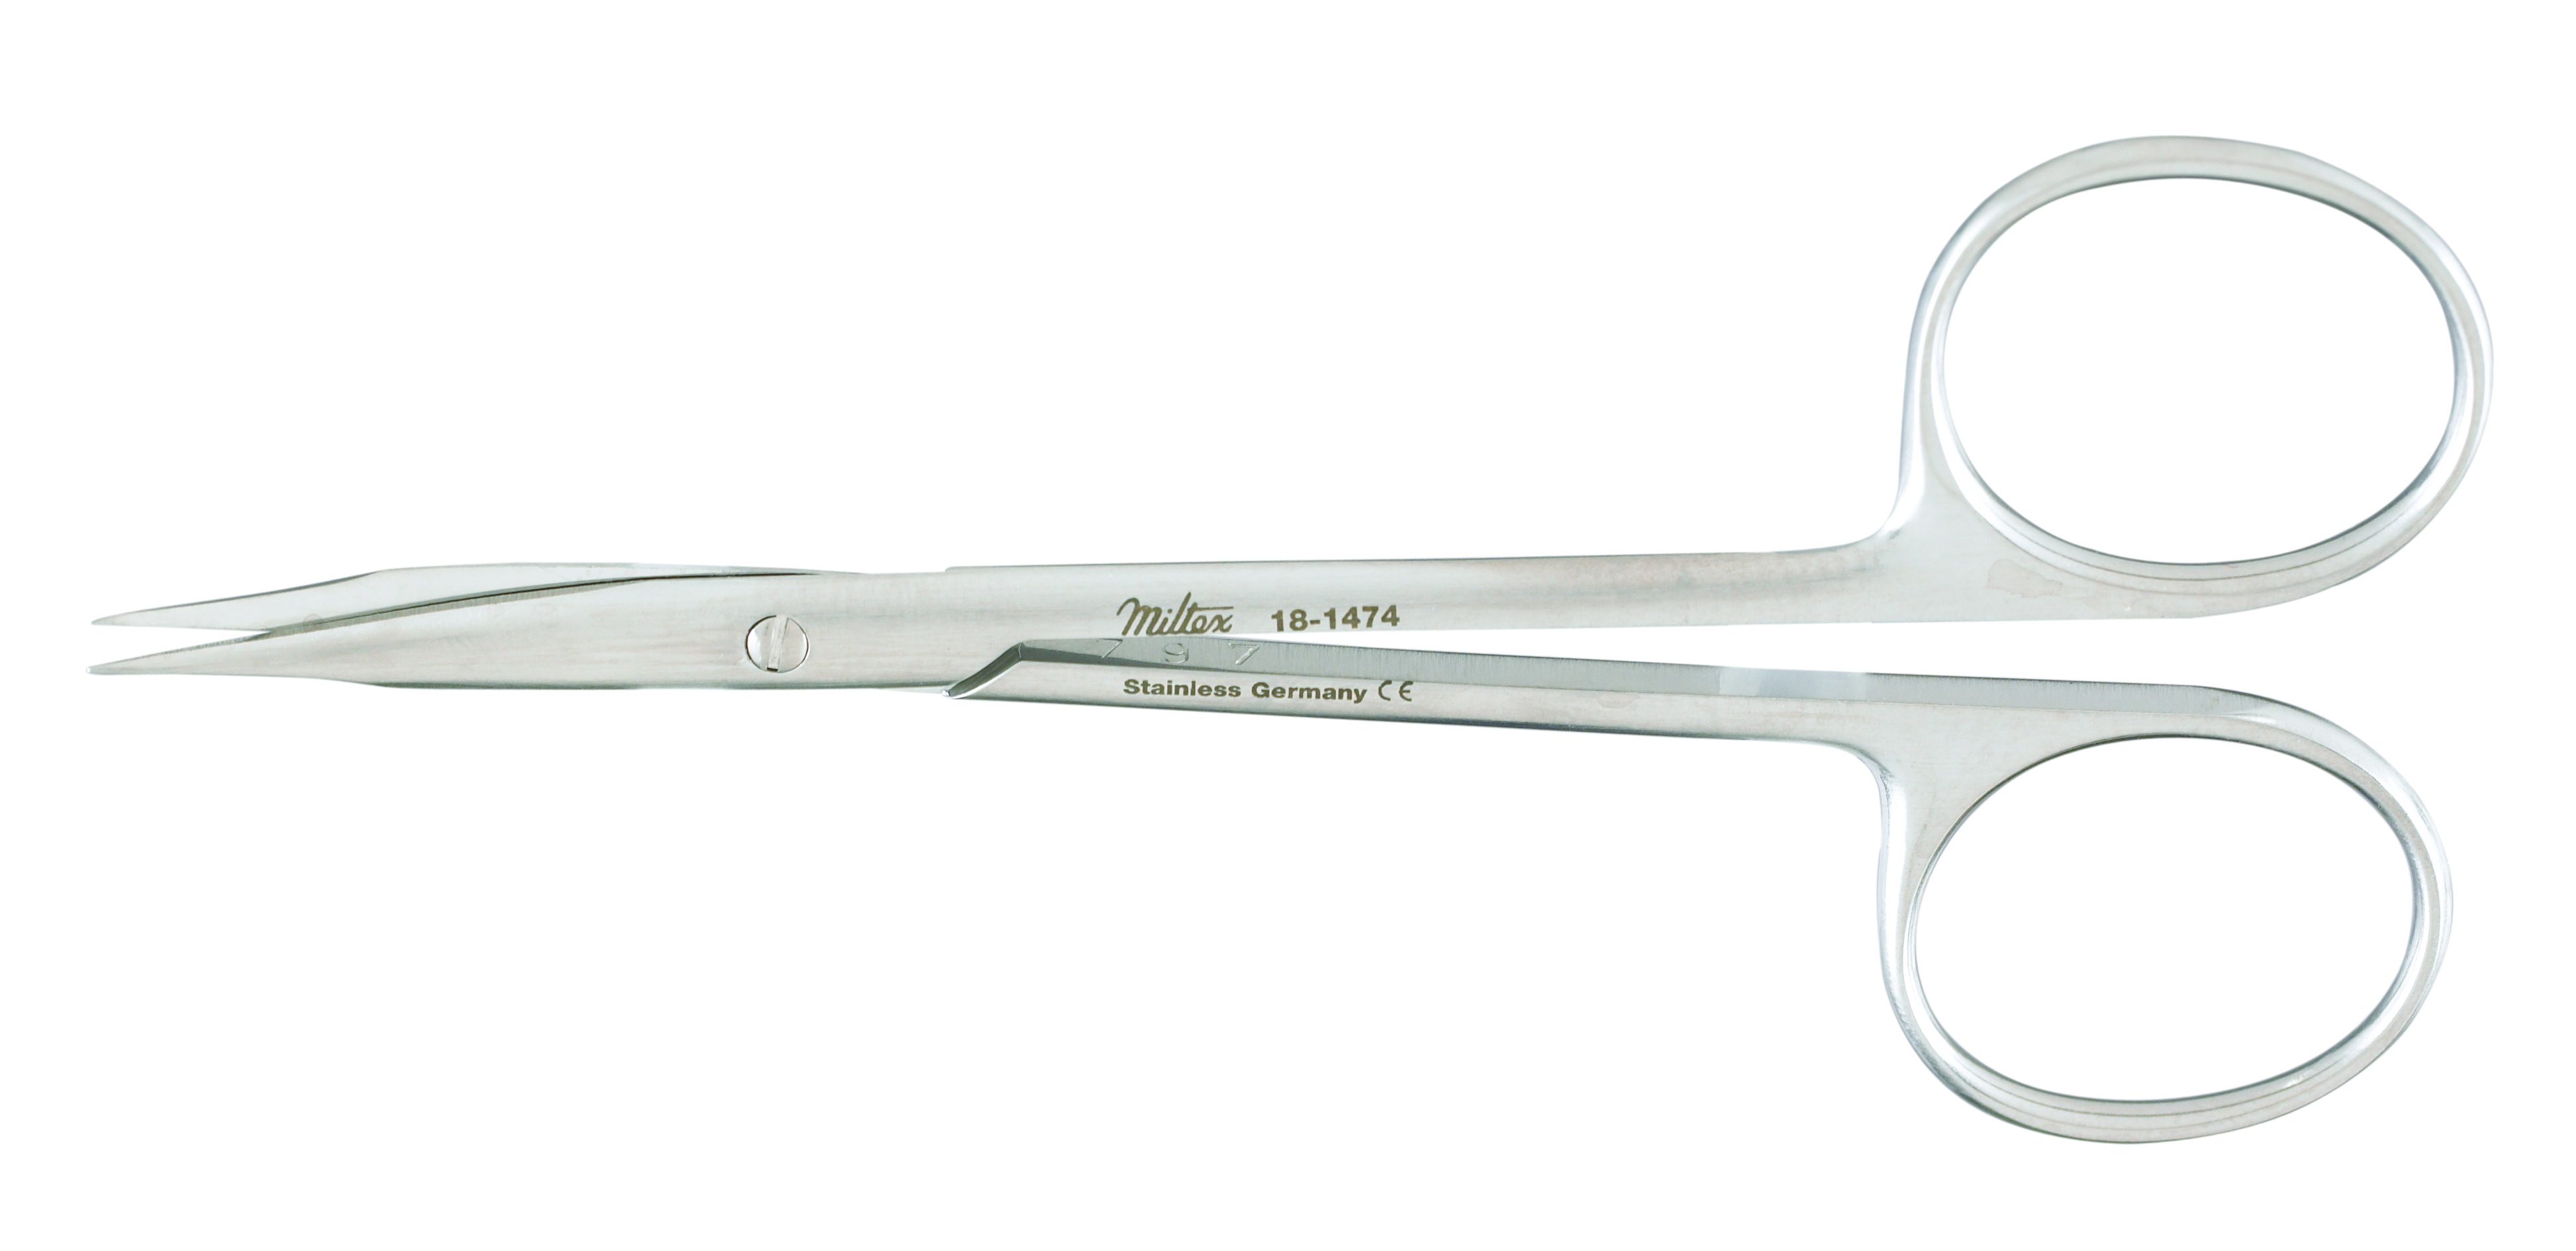 stevens-tenotomy-scissors-4-1-2-114-cm-curved-long-blade-sharp-points-18-1474-miltex.jpg